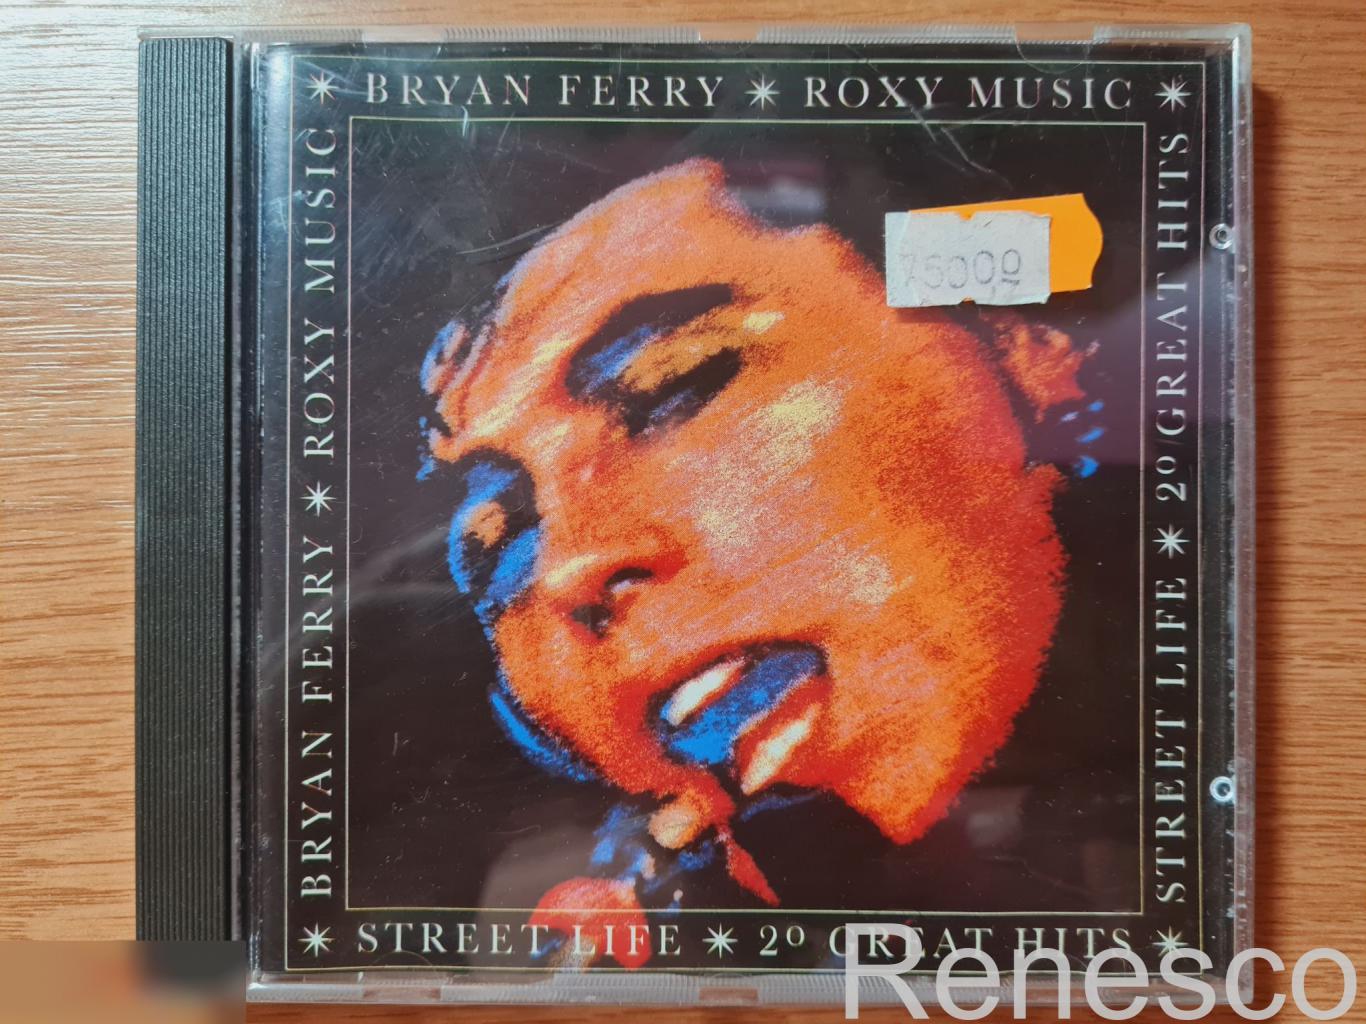 Bryan Ferry / Roxy Music ?– Street Life - 20 Great Hits (Europe) (Repress)